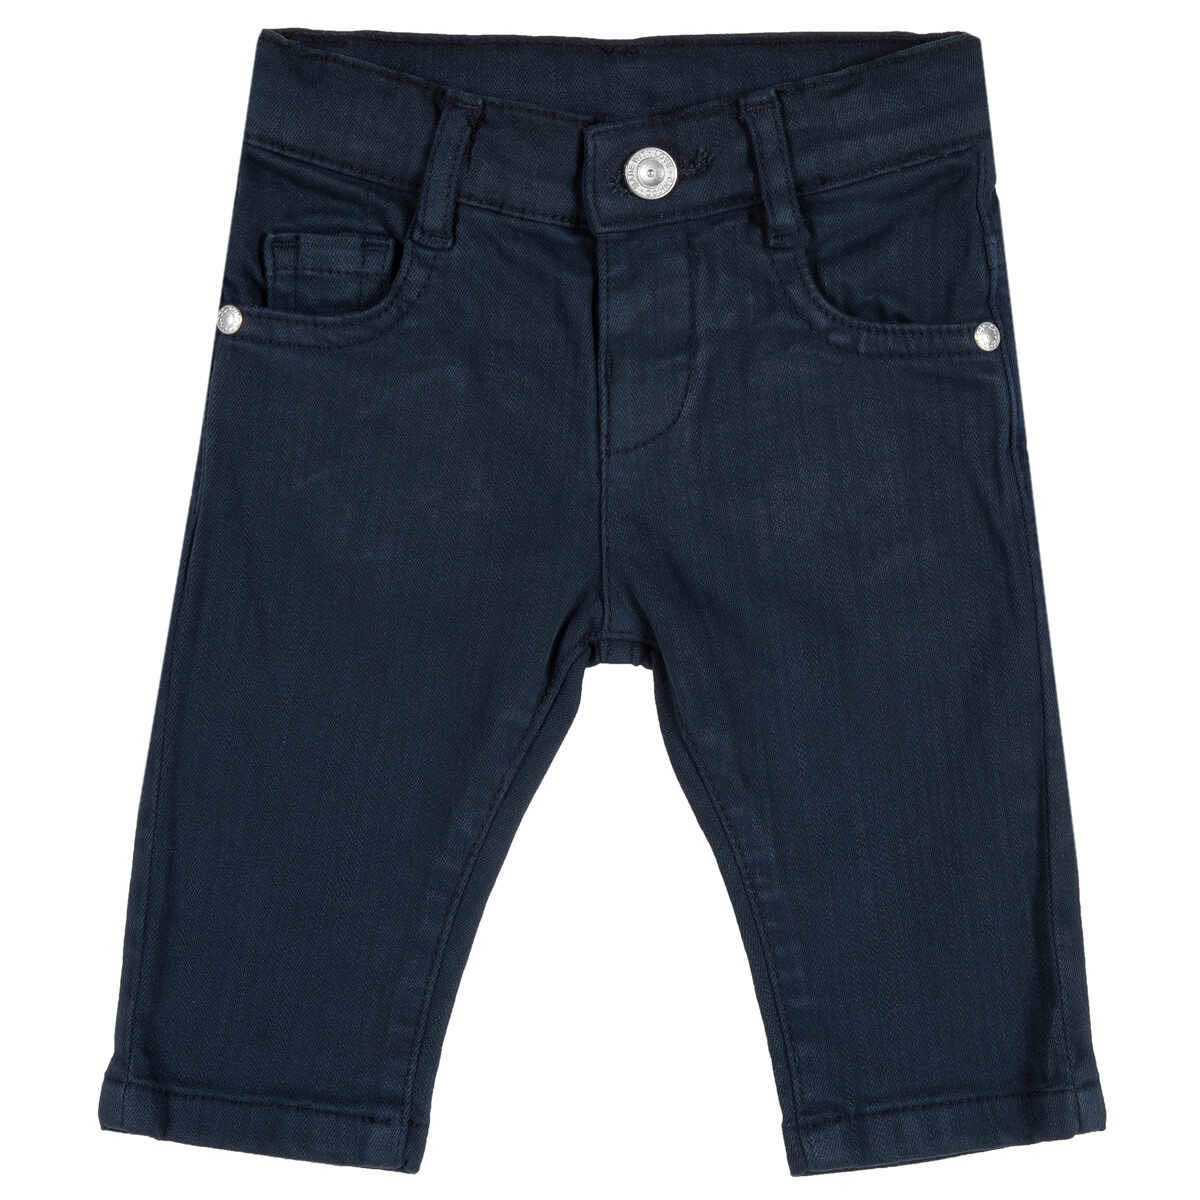 Pantalon lung copii Chicco, negru cu albastru, 08227